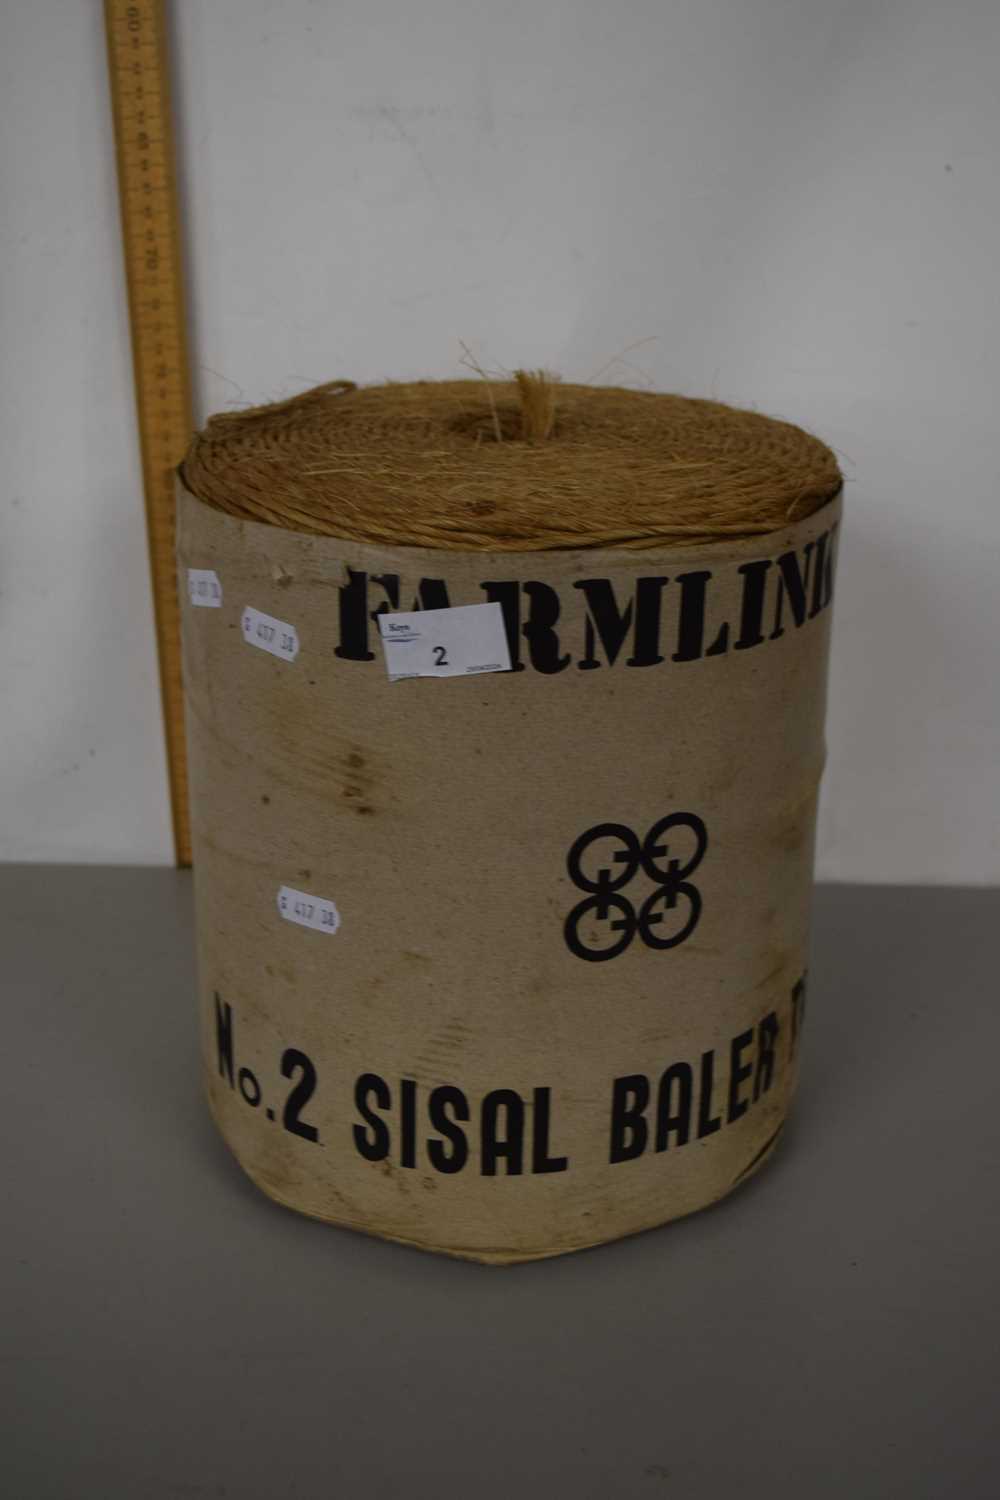 A roll of sisal baler twine